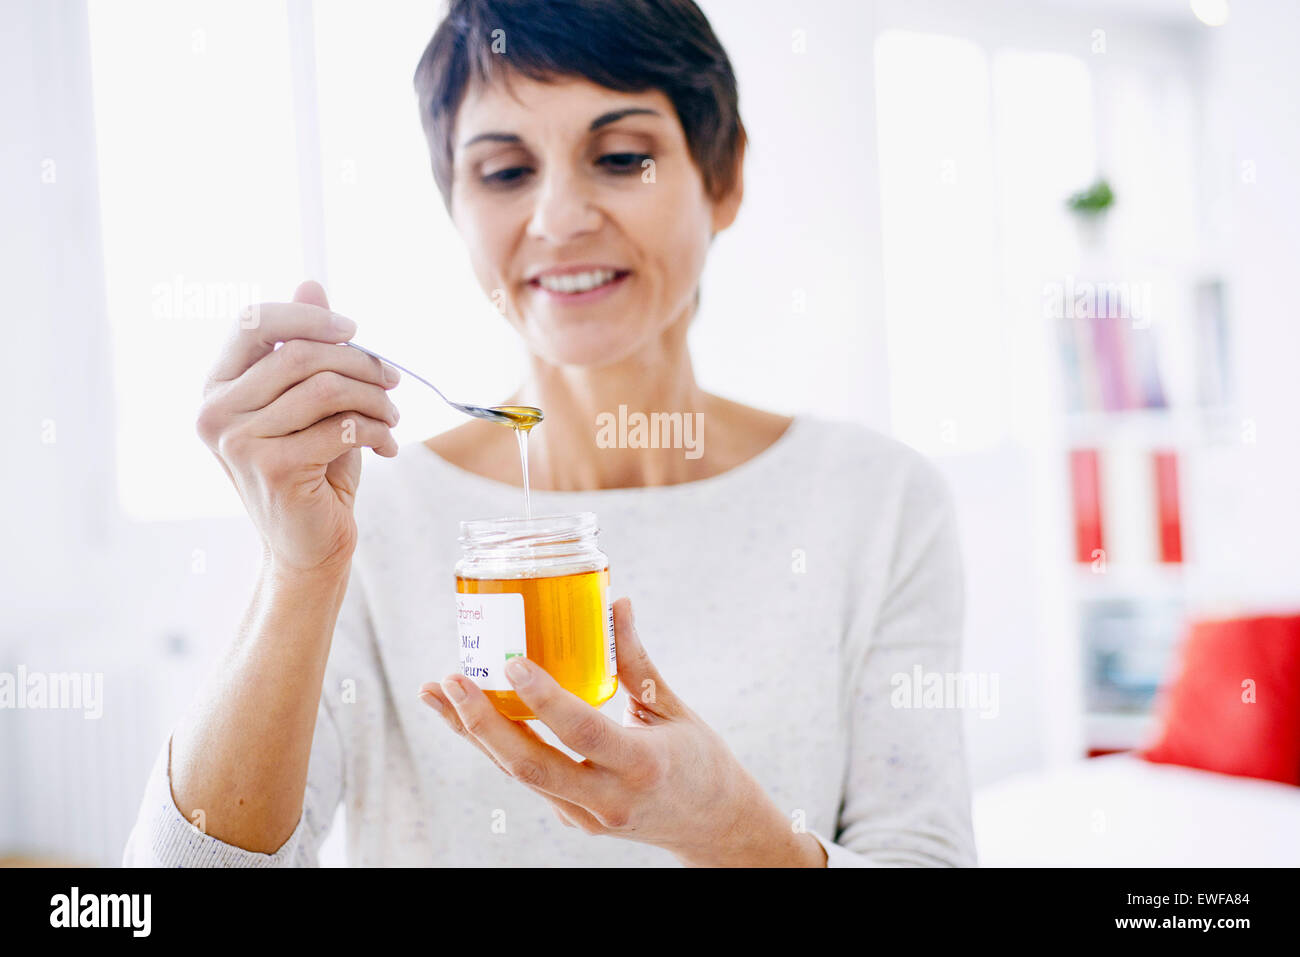 WOMAN EATING HONEY Stock Photo